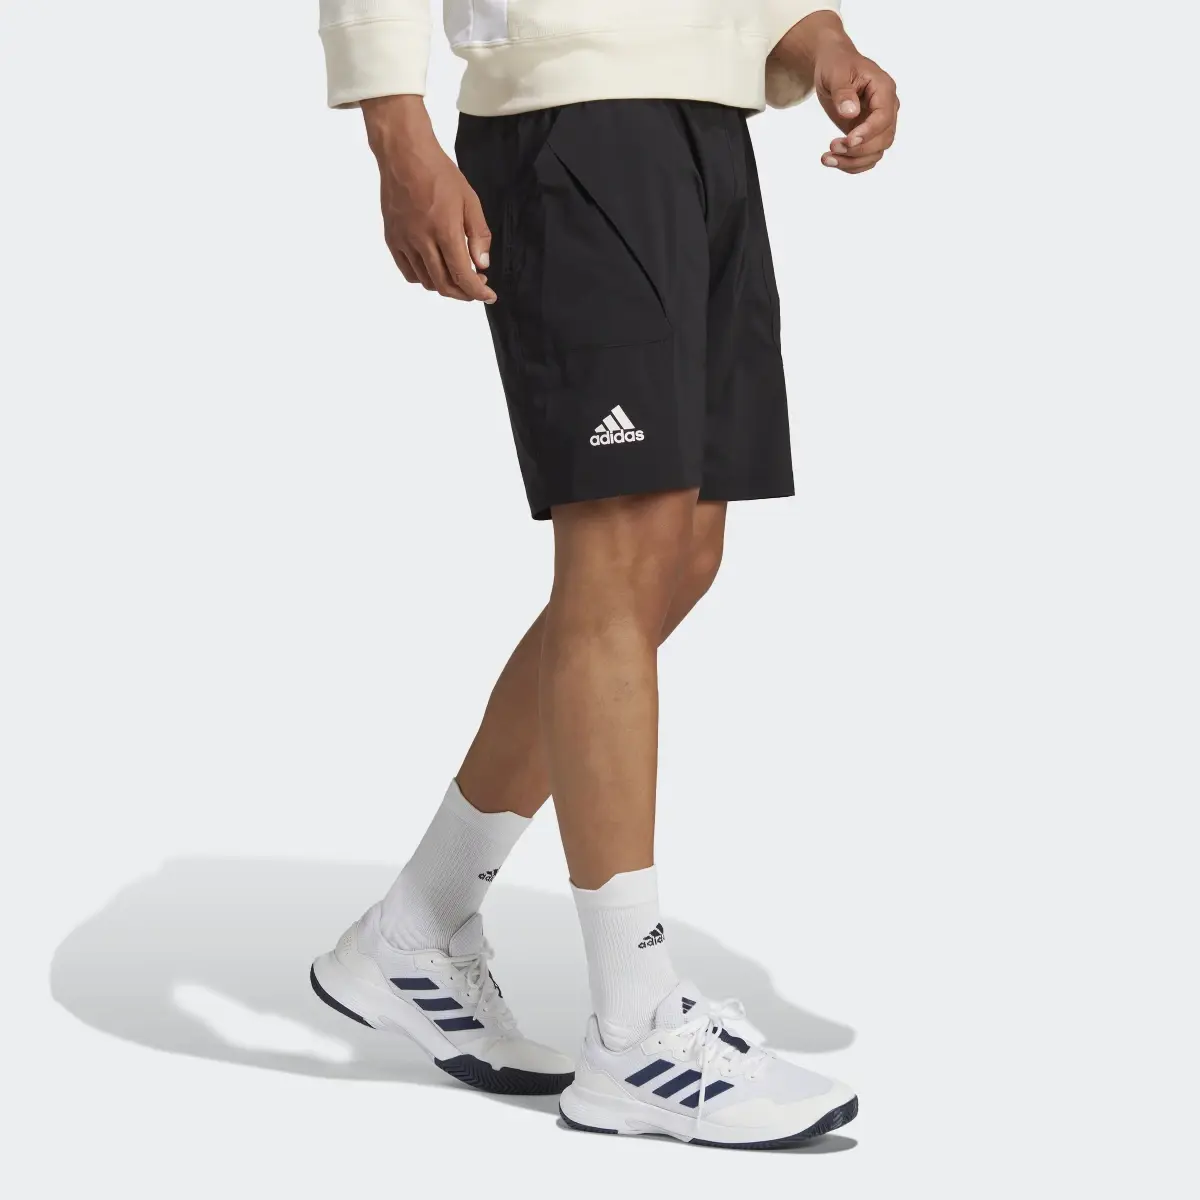 Adidas Tennis New York Ergo Shorts. 1